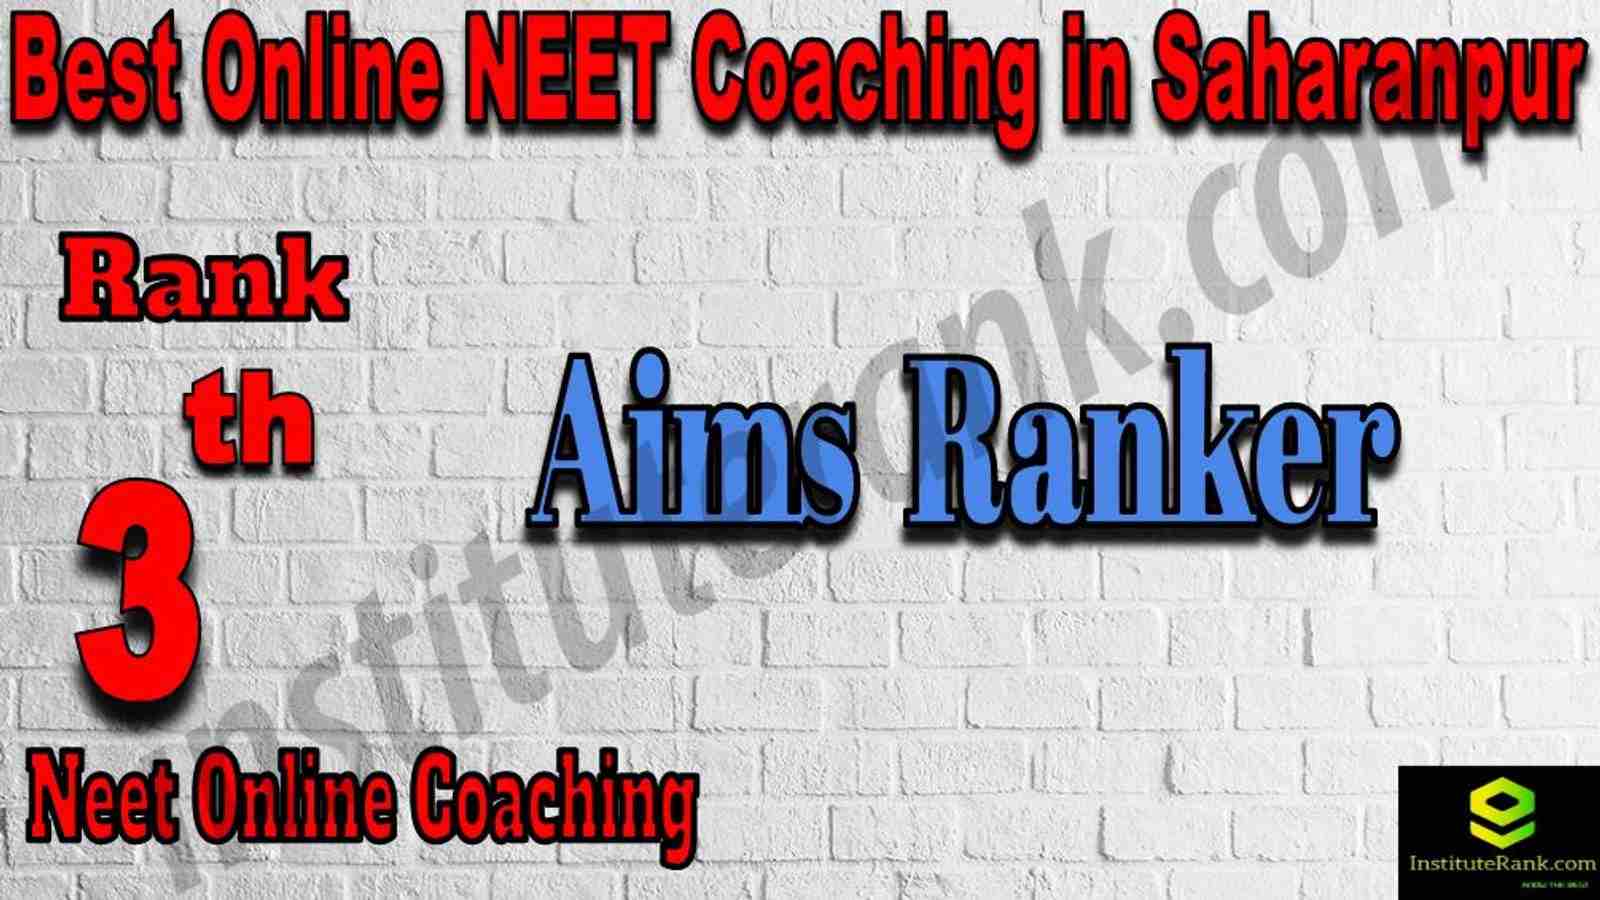 3rd Best Online Neet Coaching in Saharanpur